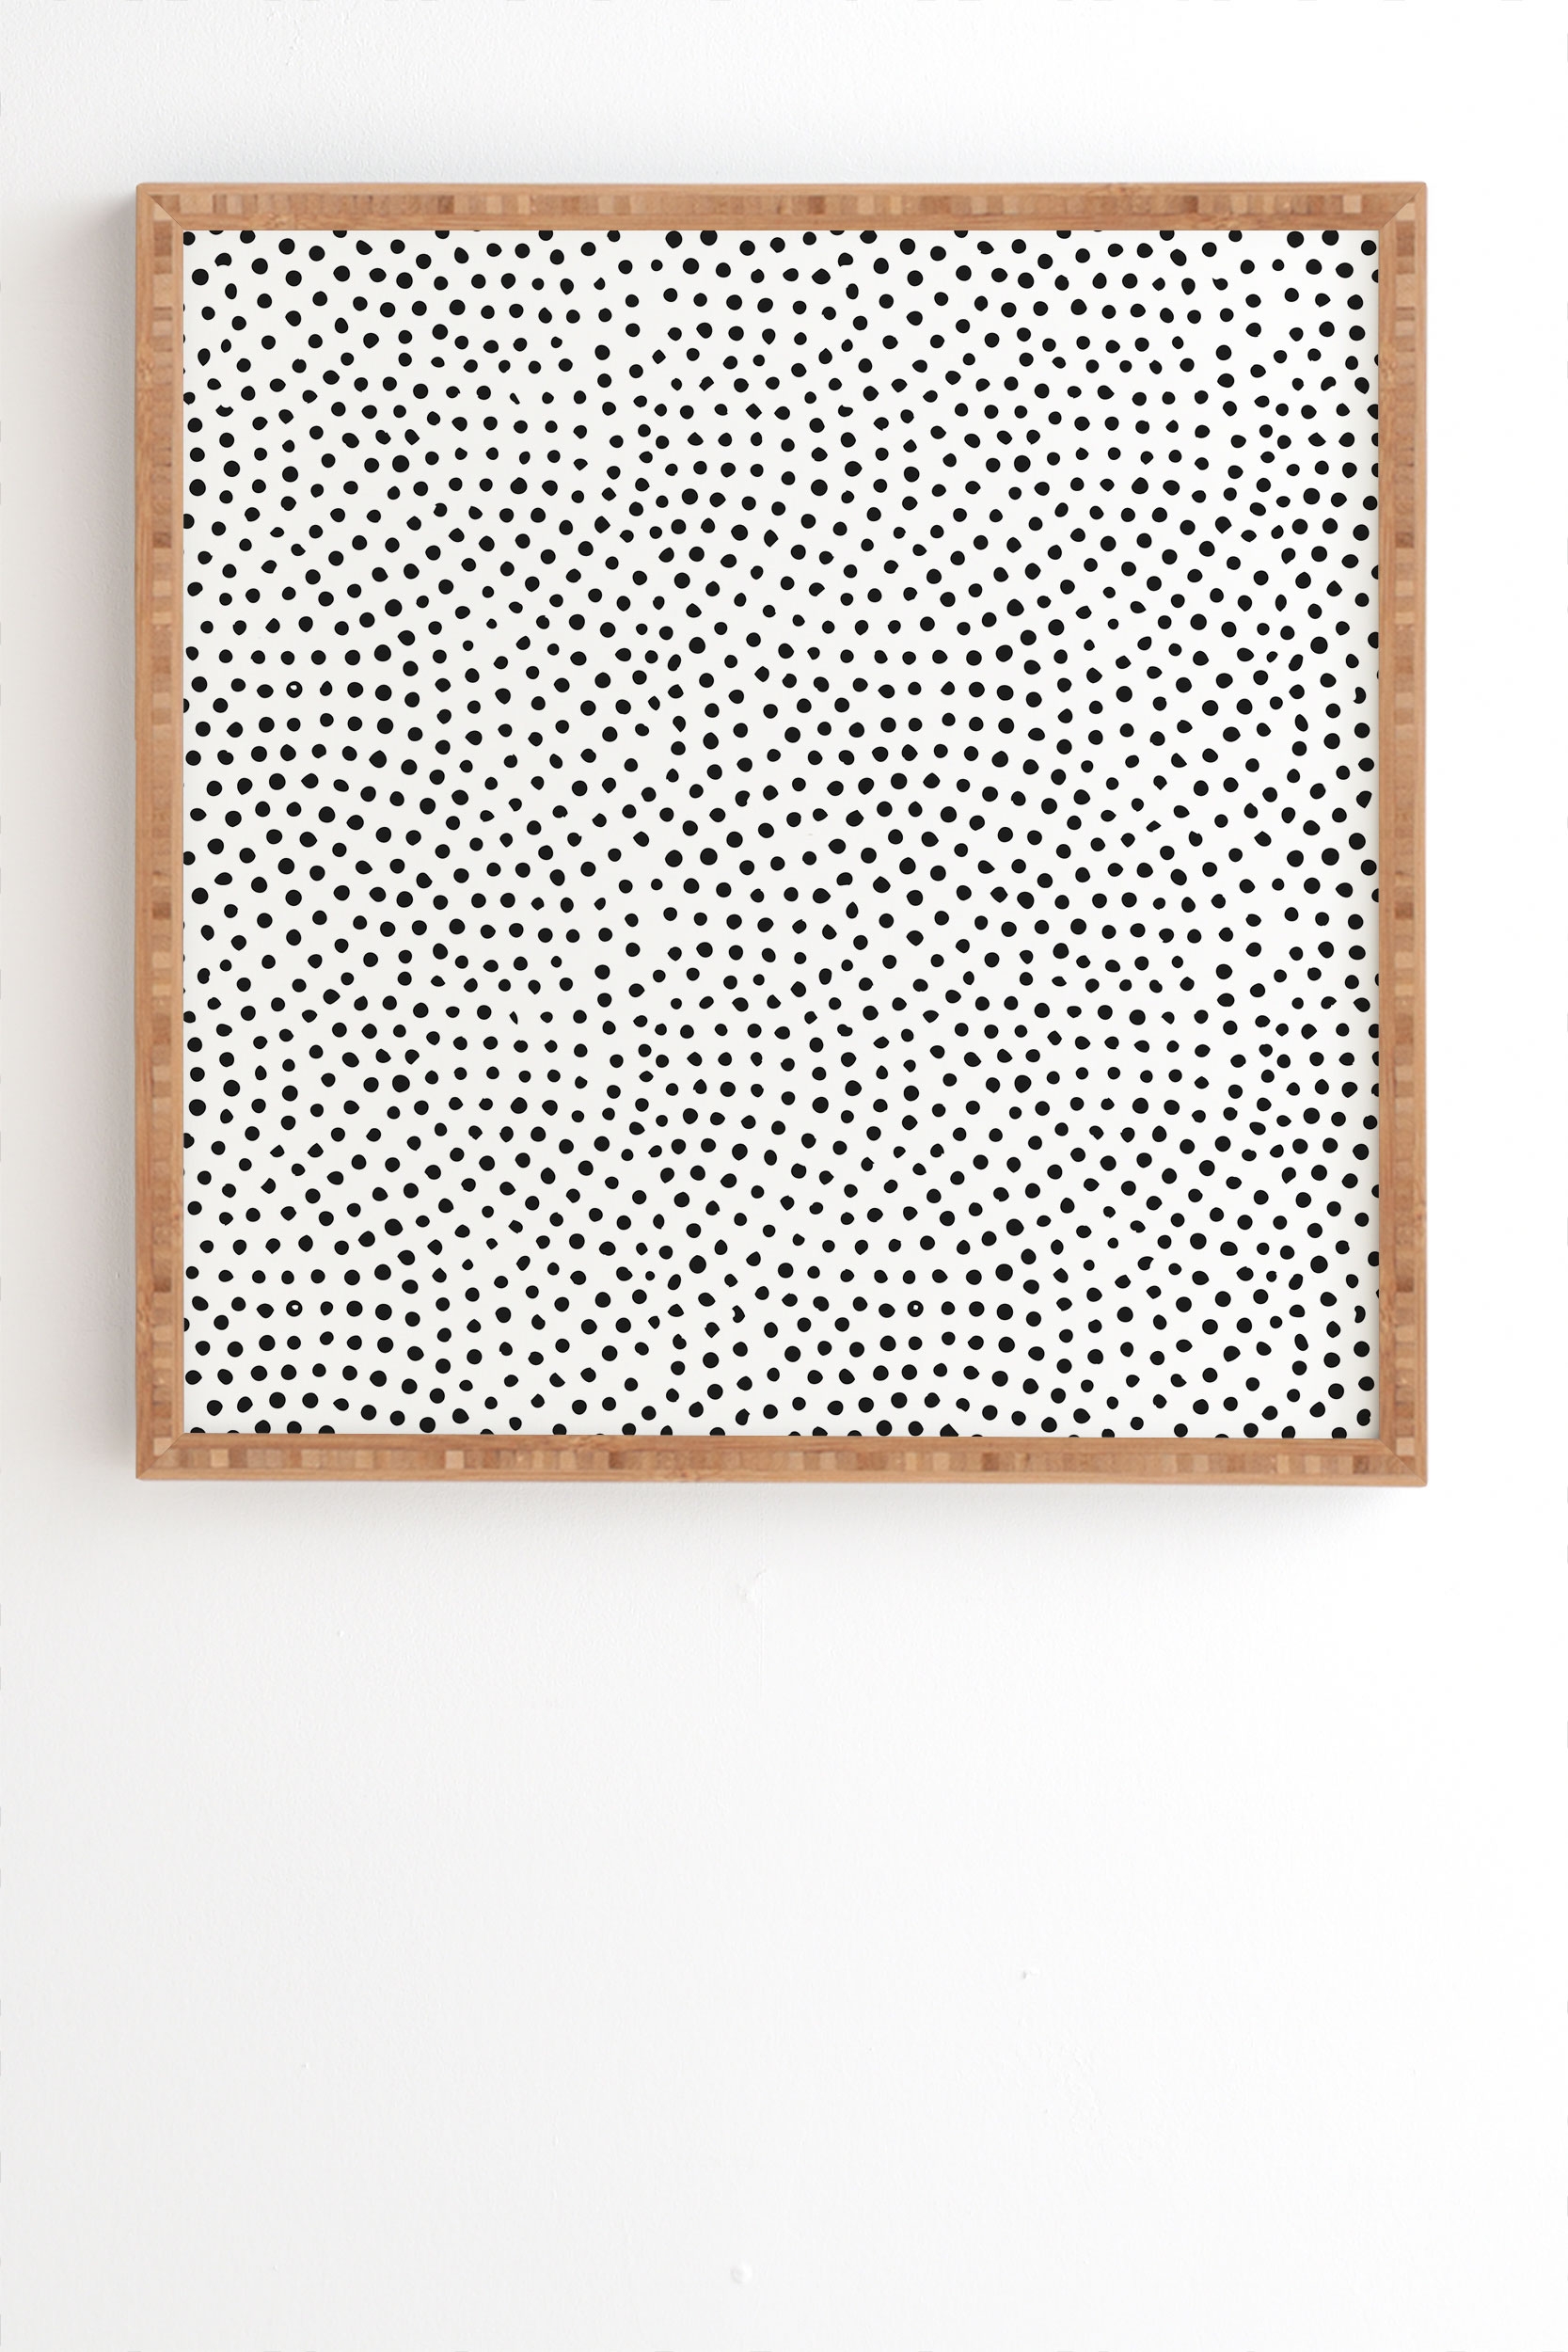 Black Polka Dots by Emanuela Carratoni - Framed Wall Art Bamboo 14" x 16.5" - Image 1